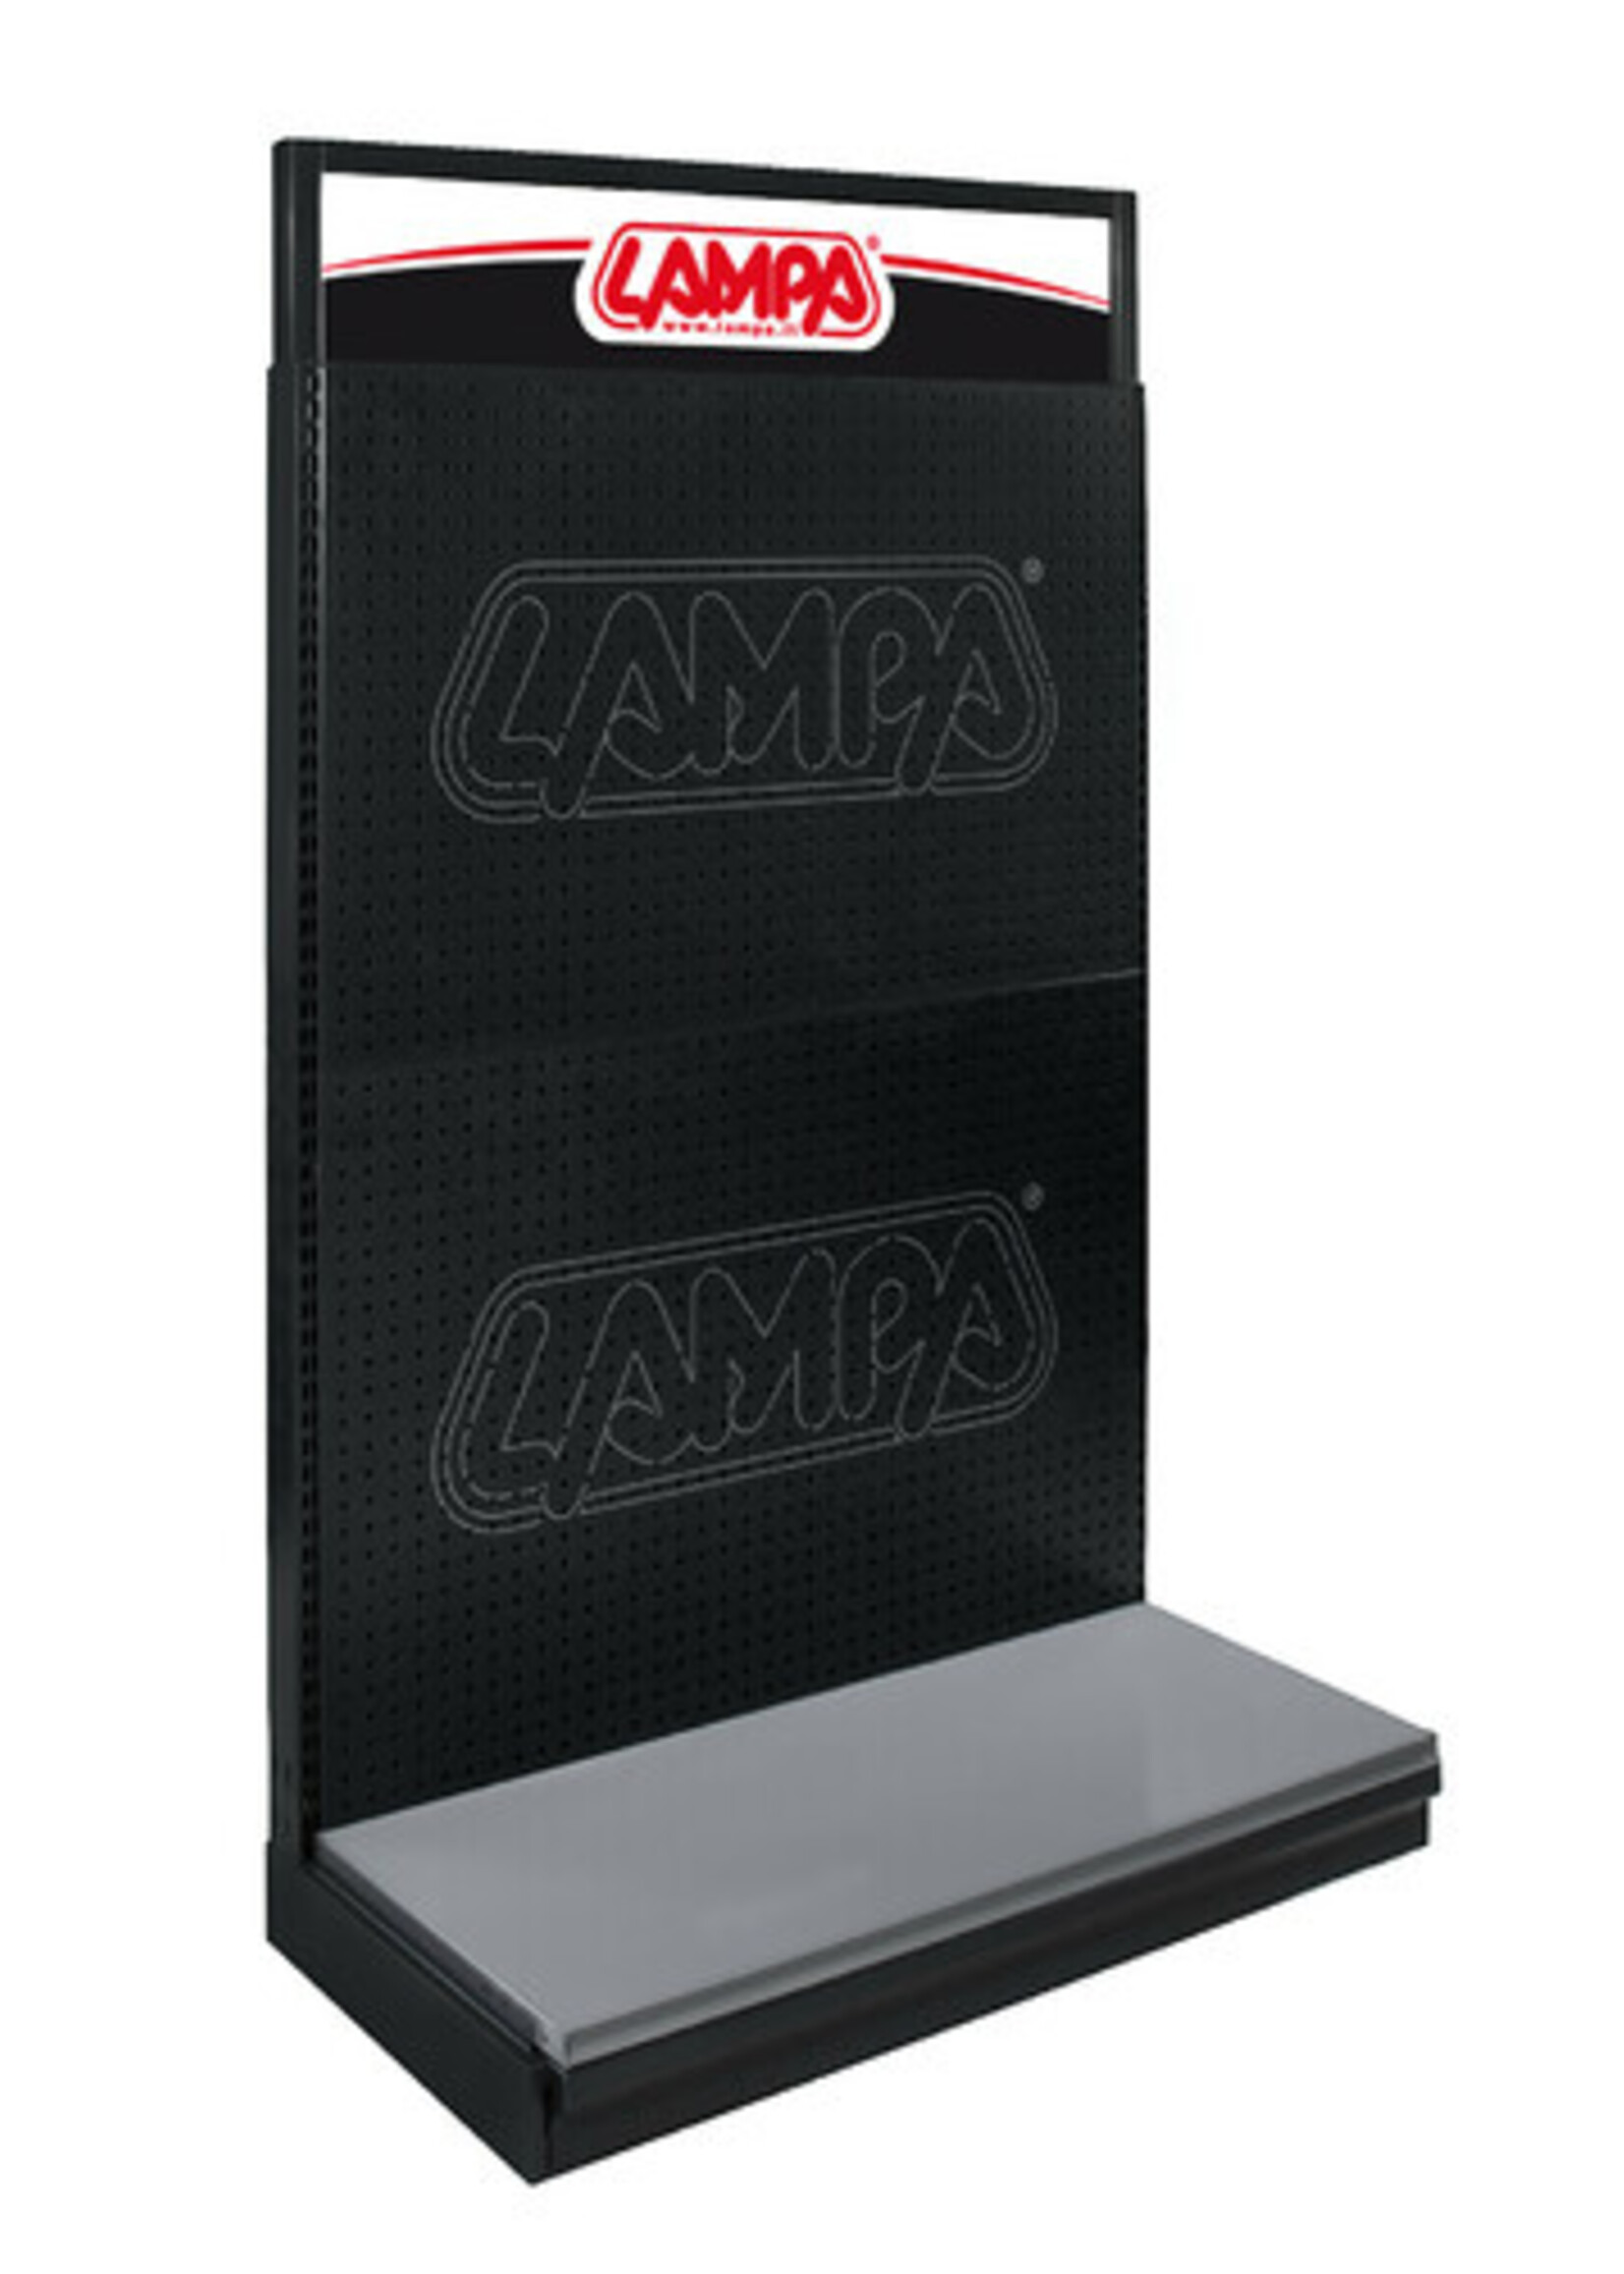 Lampa Modular display rack F10, panels and accessories kit - 174 cm